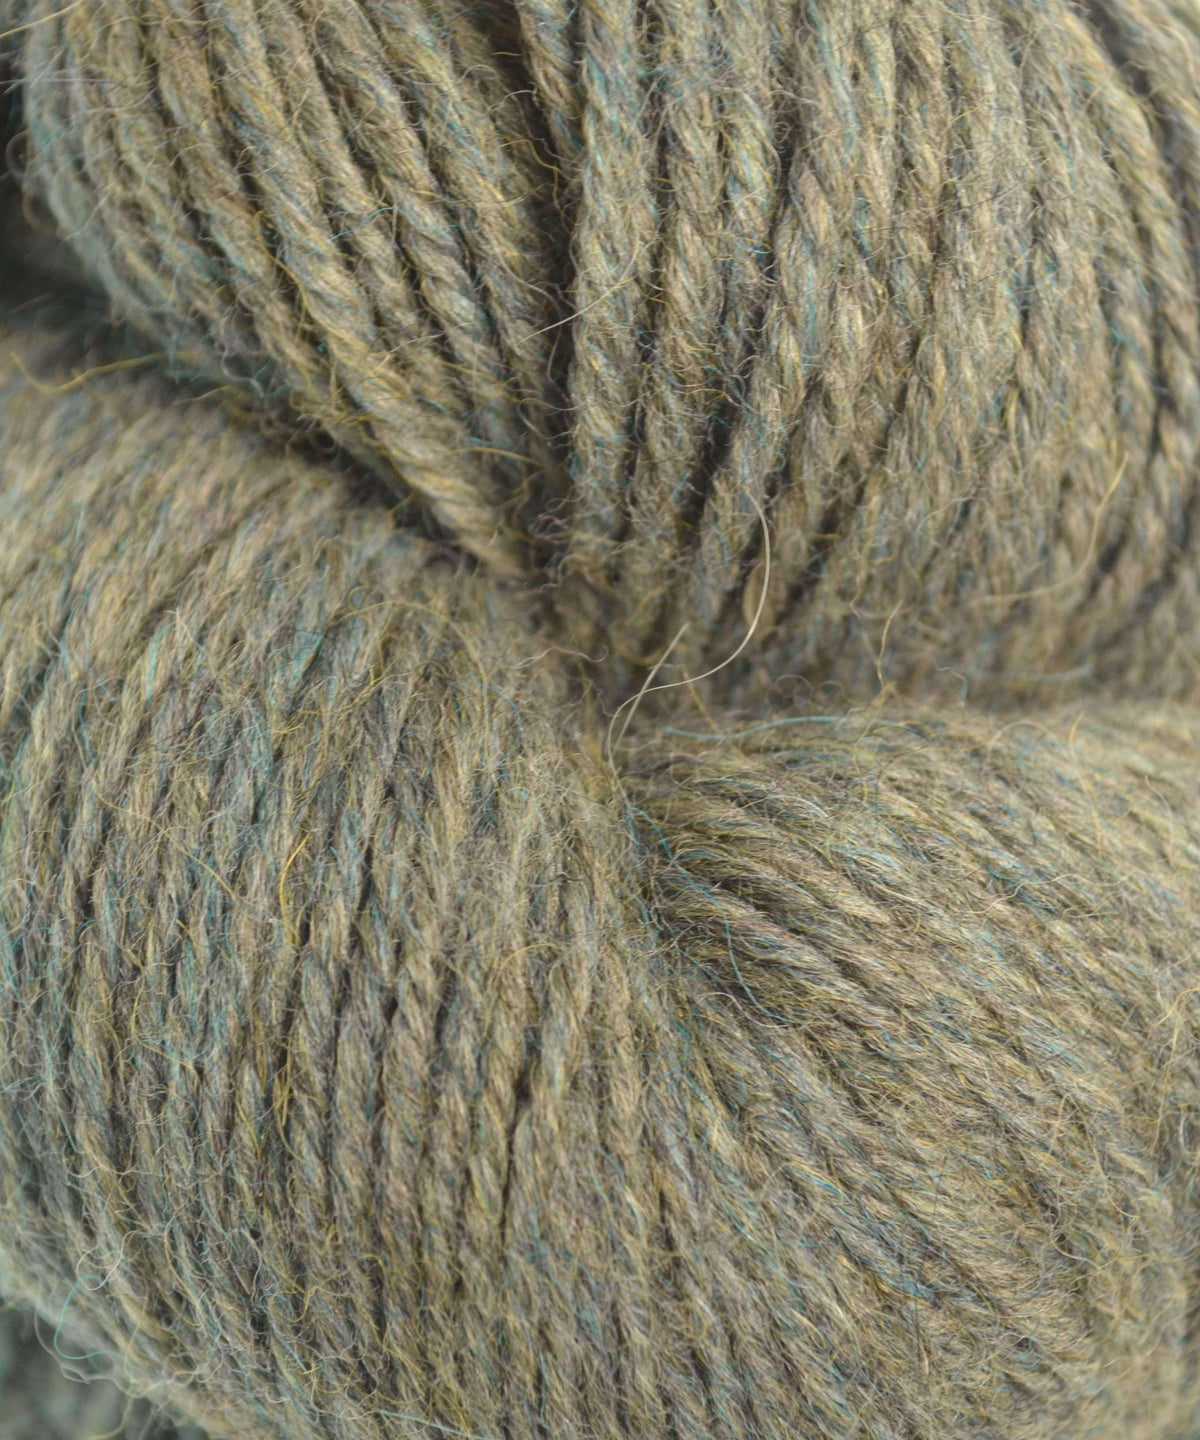 Berroco Ultra Alpaca Yarn - 6245 Pitch Black at Jimmy Beans Wool